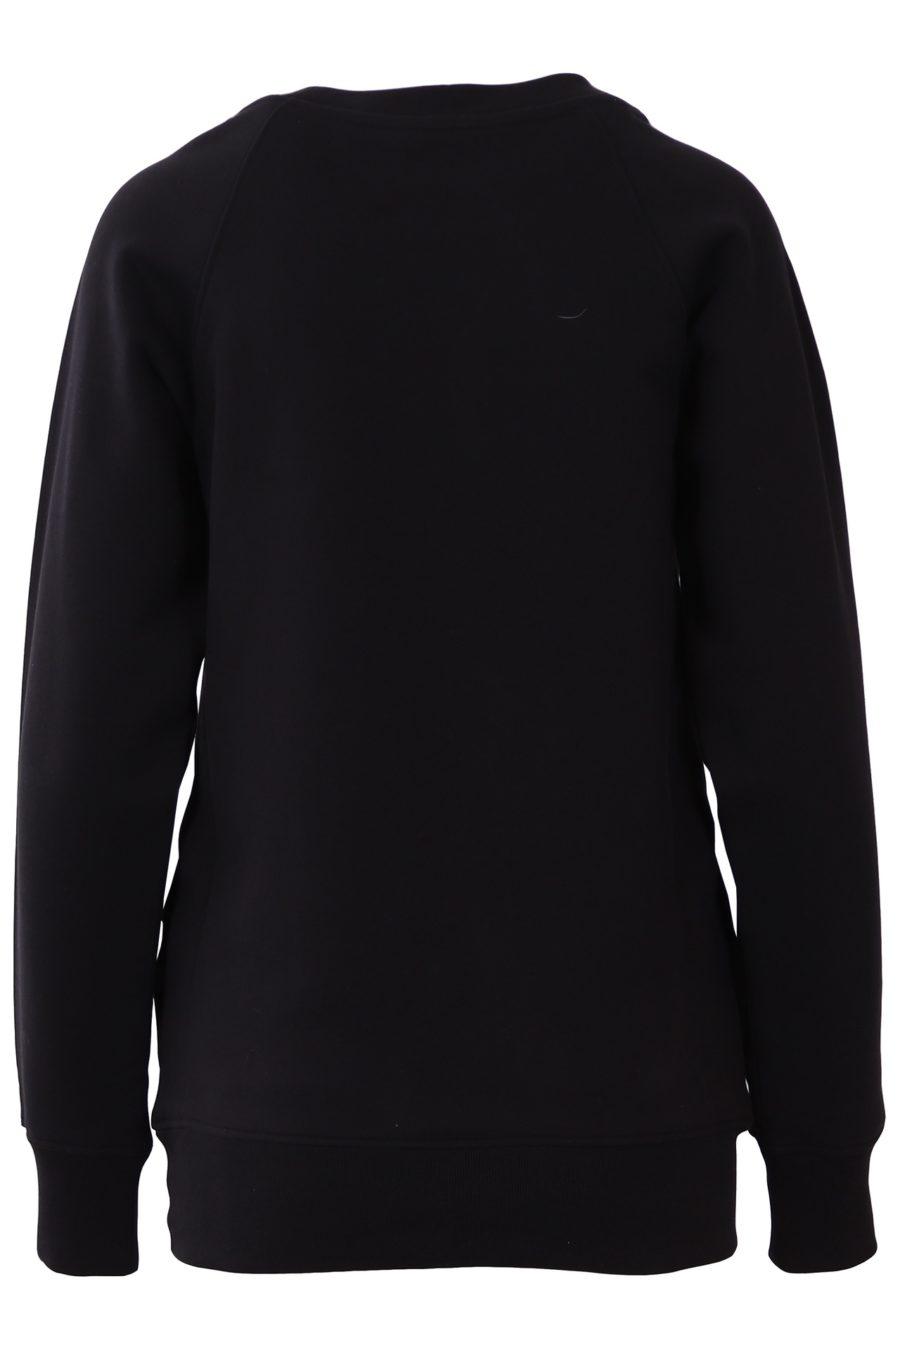 Moschino Couture black sweatshirt with Italian bear - e1cf073597689e0efcc755eb521ac225542063cf